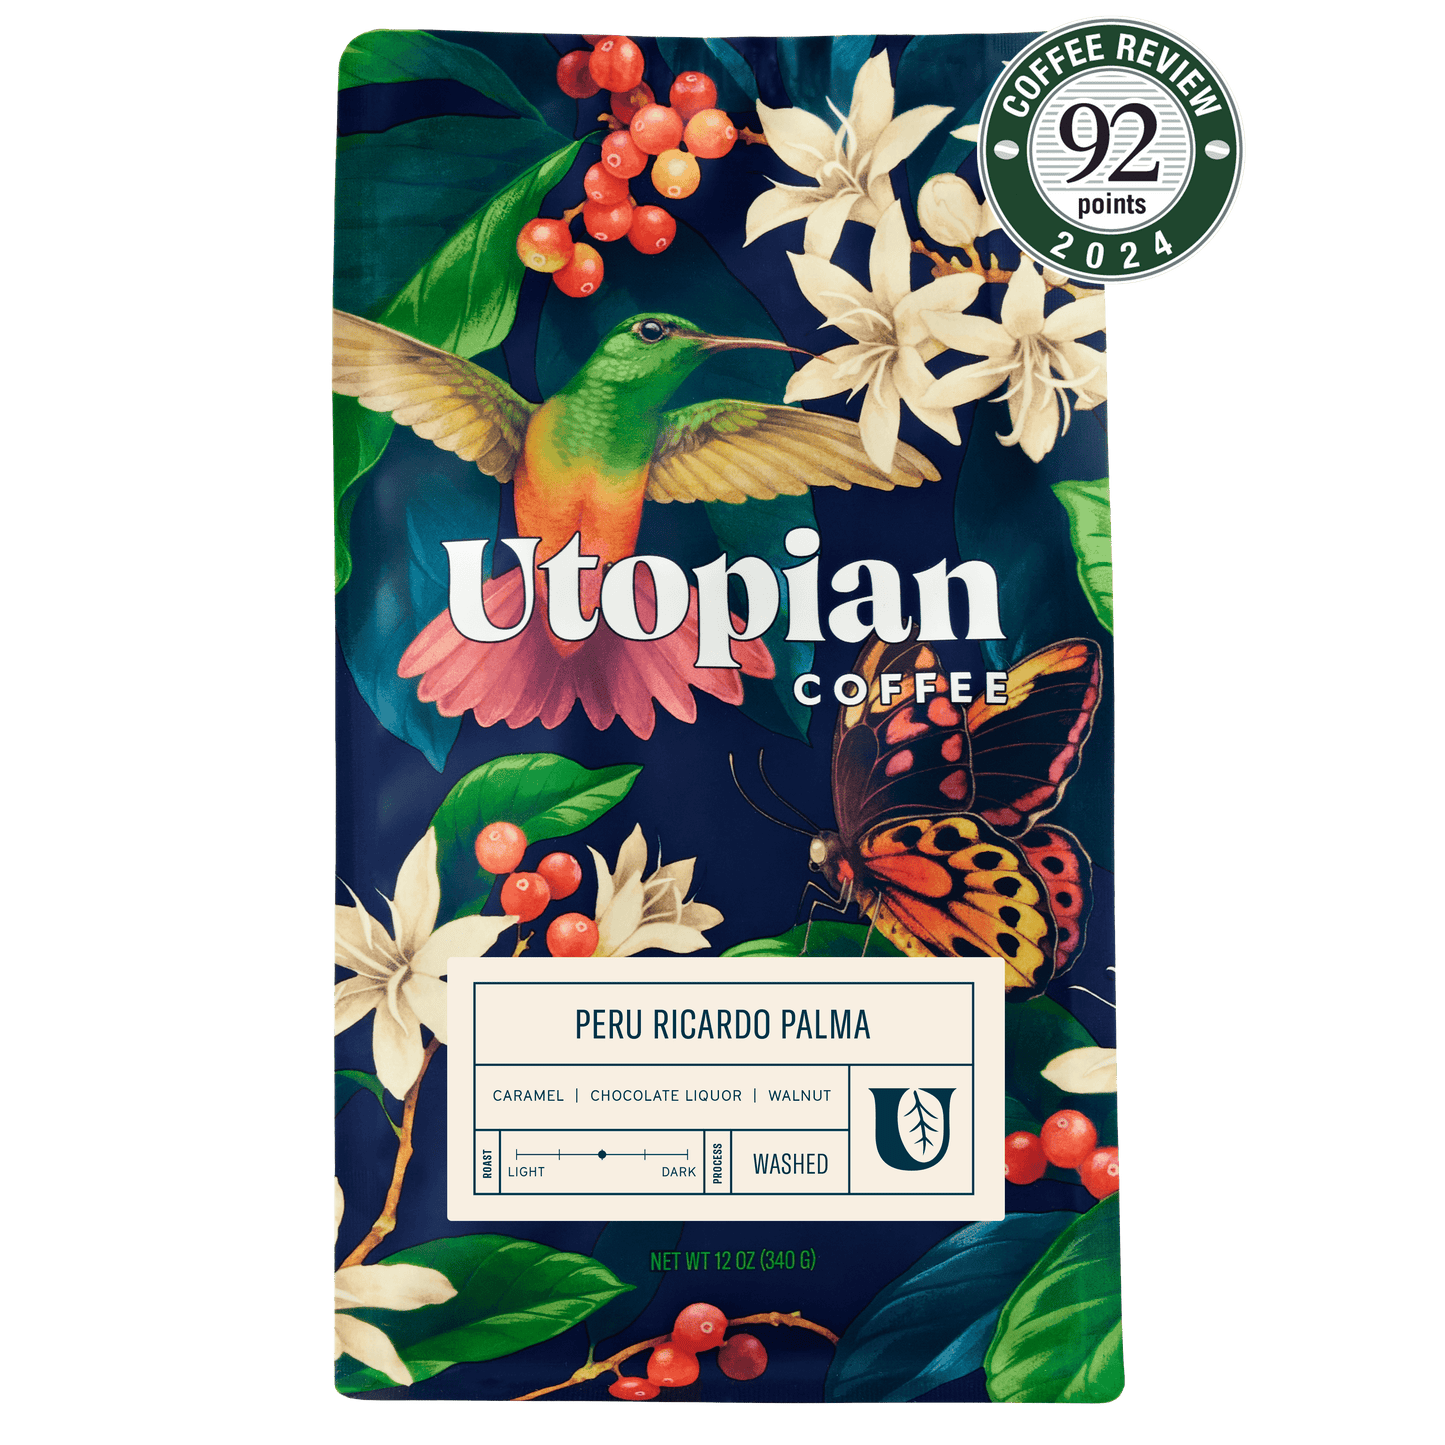 Peru Ricardo Palma - Utopian Coffee